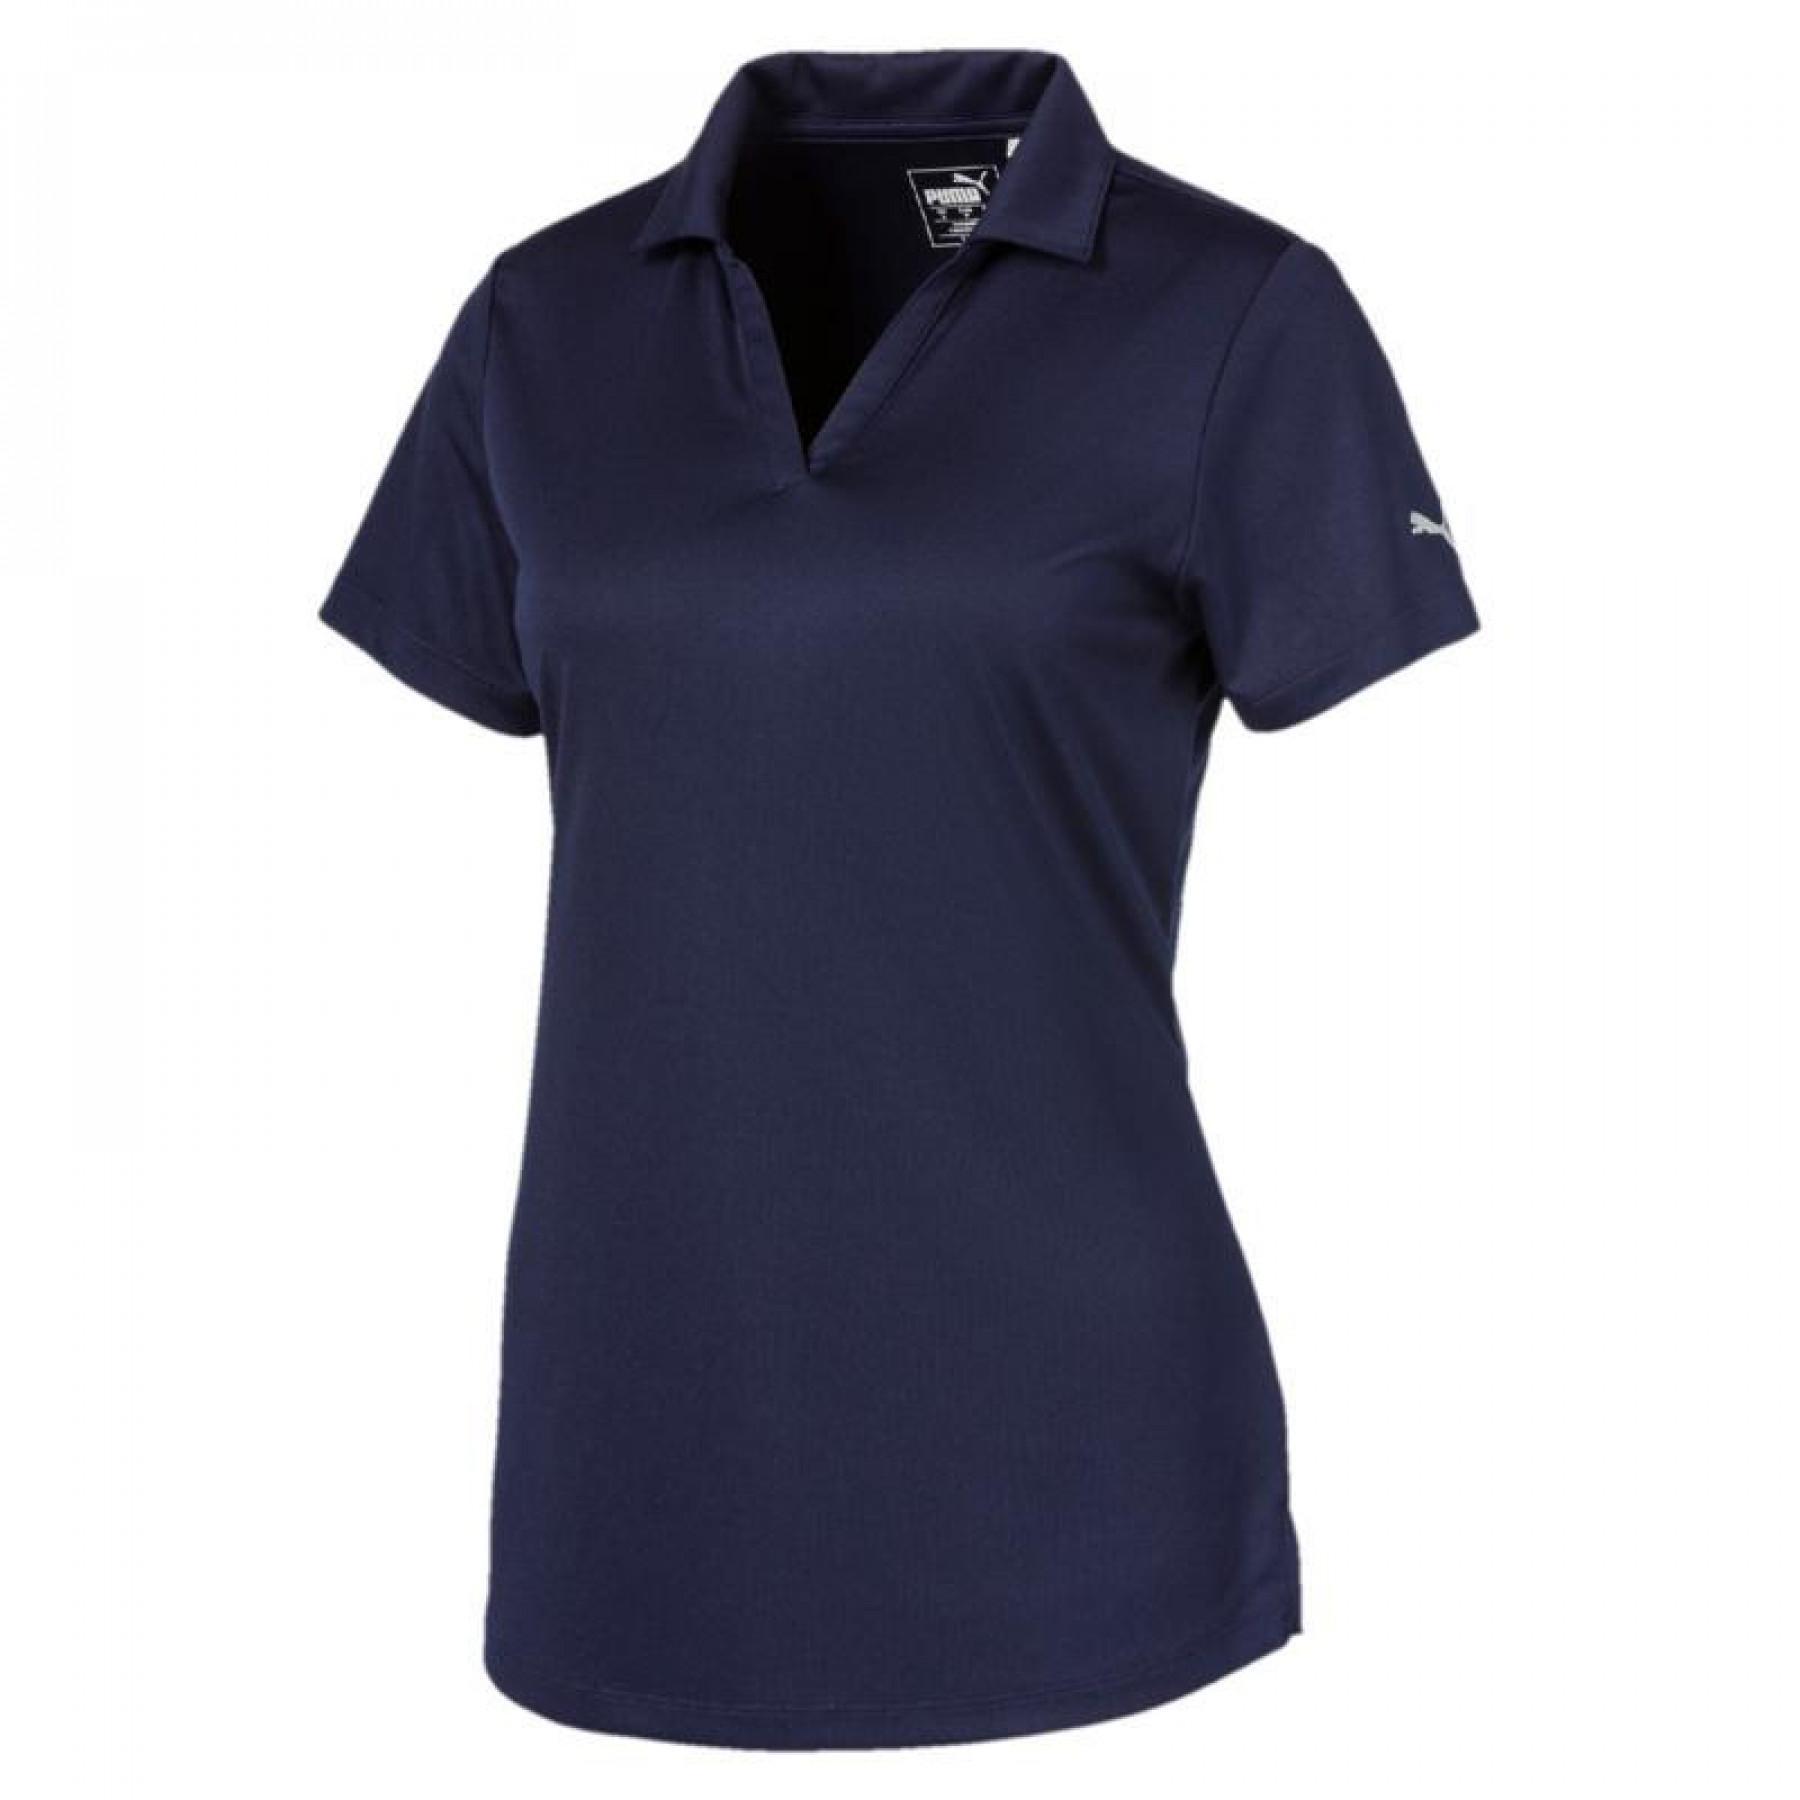 Women's polo shirt Puma Icon golf